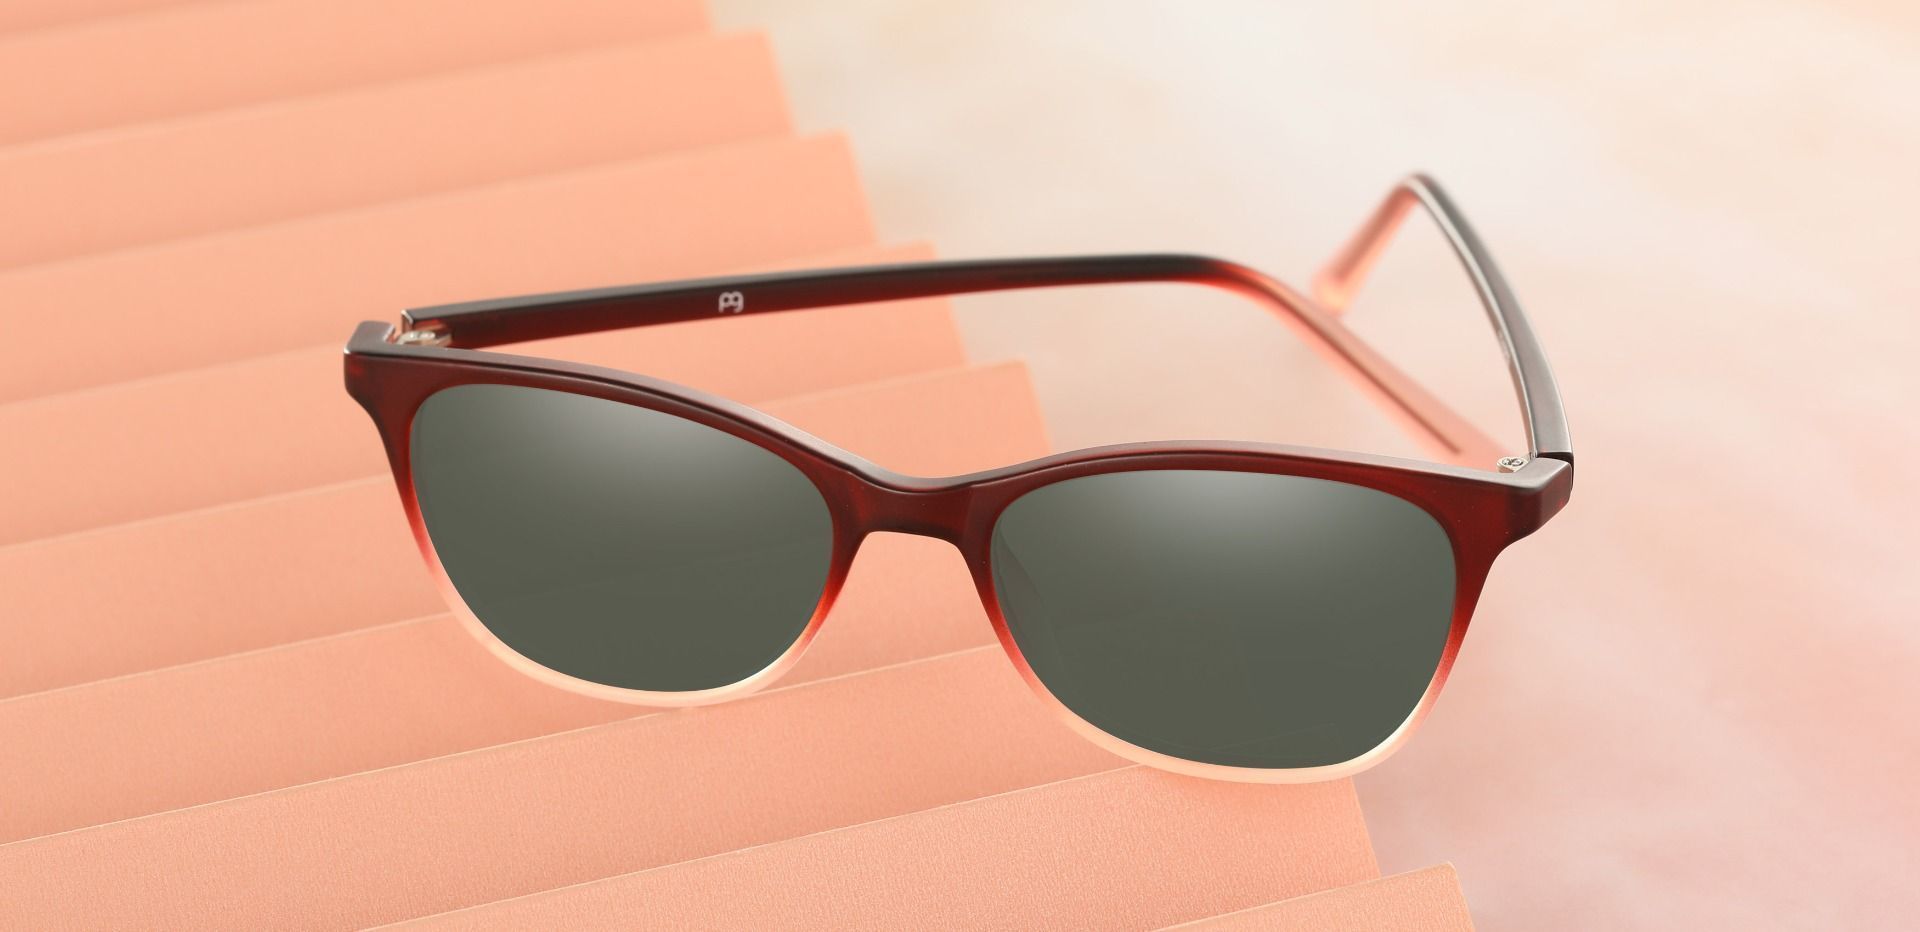 Sasha Classic Square Prescription Sunglasses - Red Frame With Green Lenses